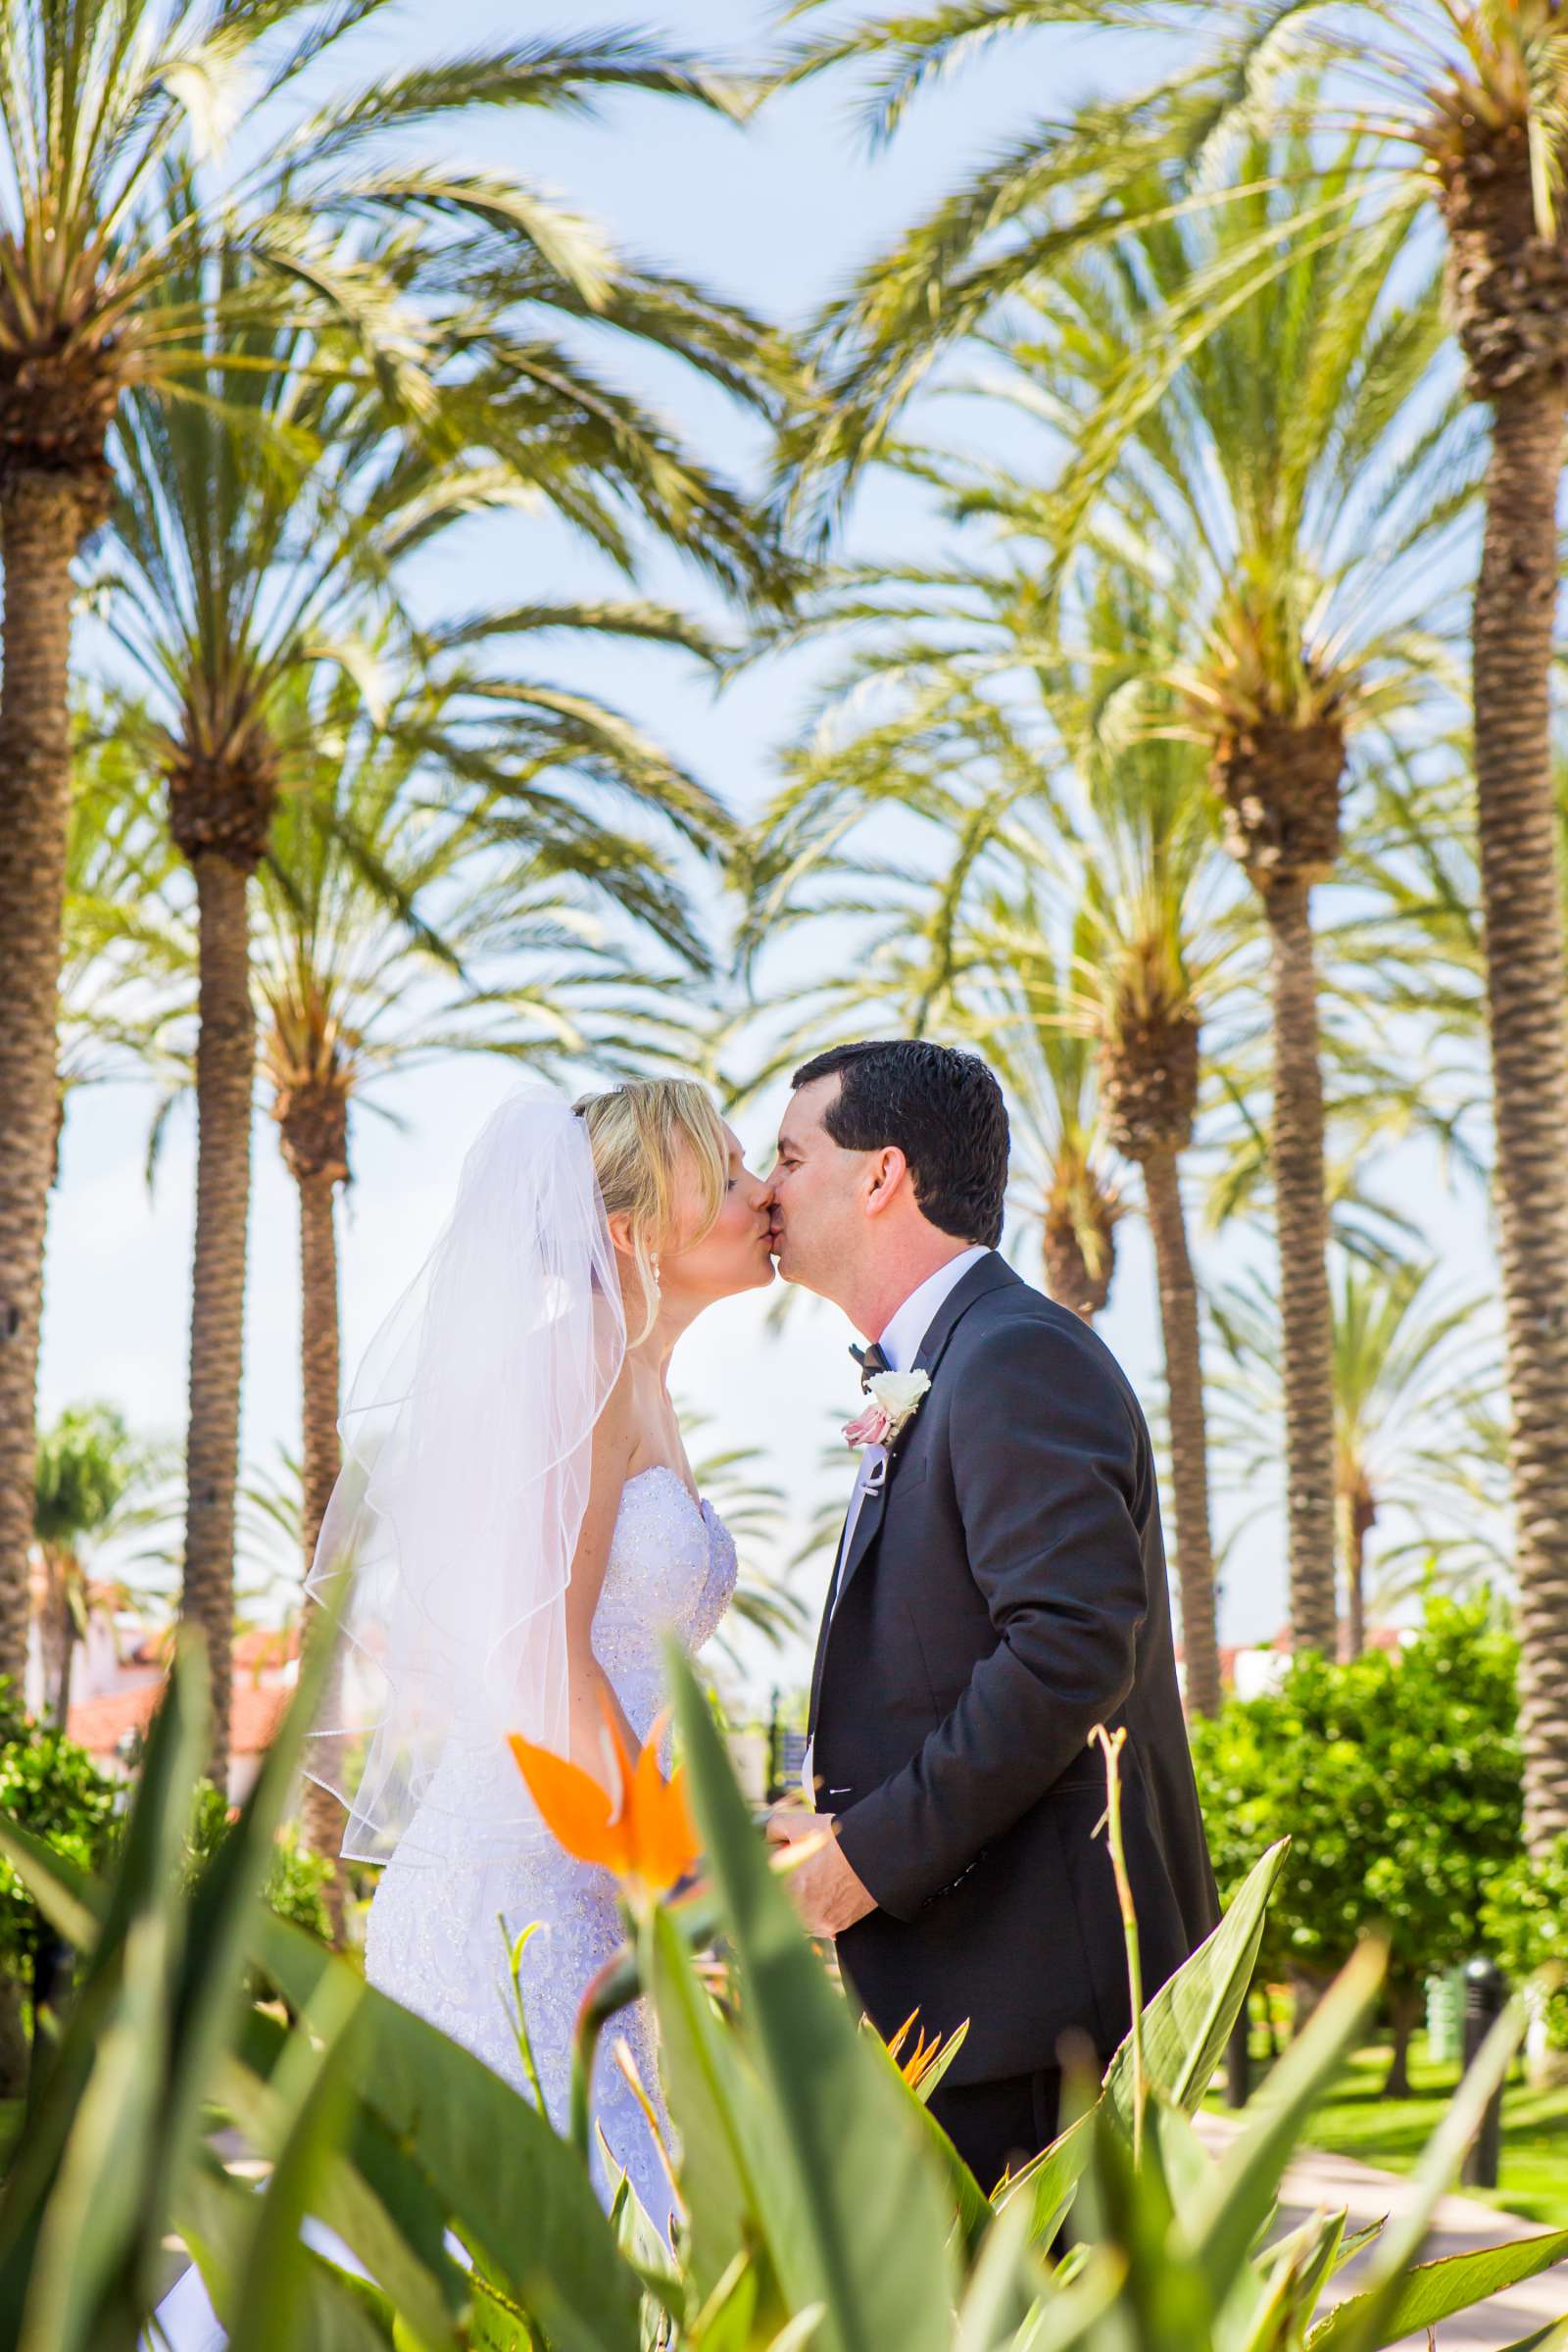 Omni La Costa Resort & Spa Wedding coordinated by Elements of Style, Irina and Brett Wedding Photo #1 by True Photography